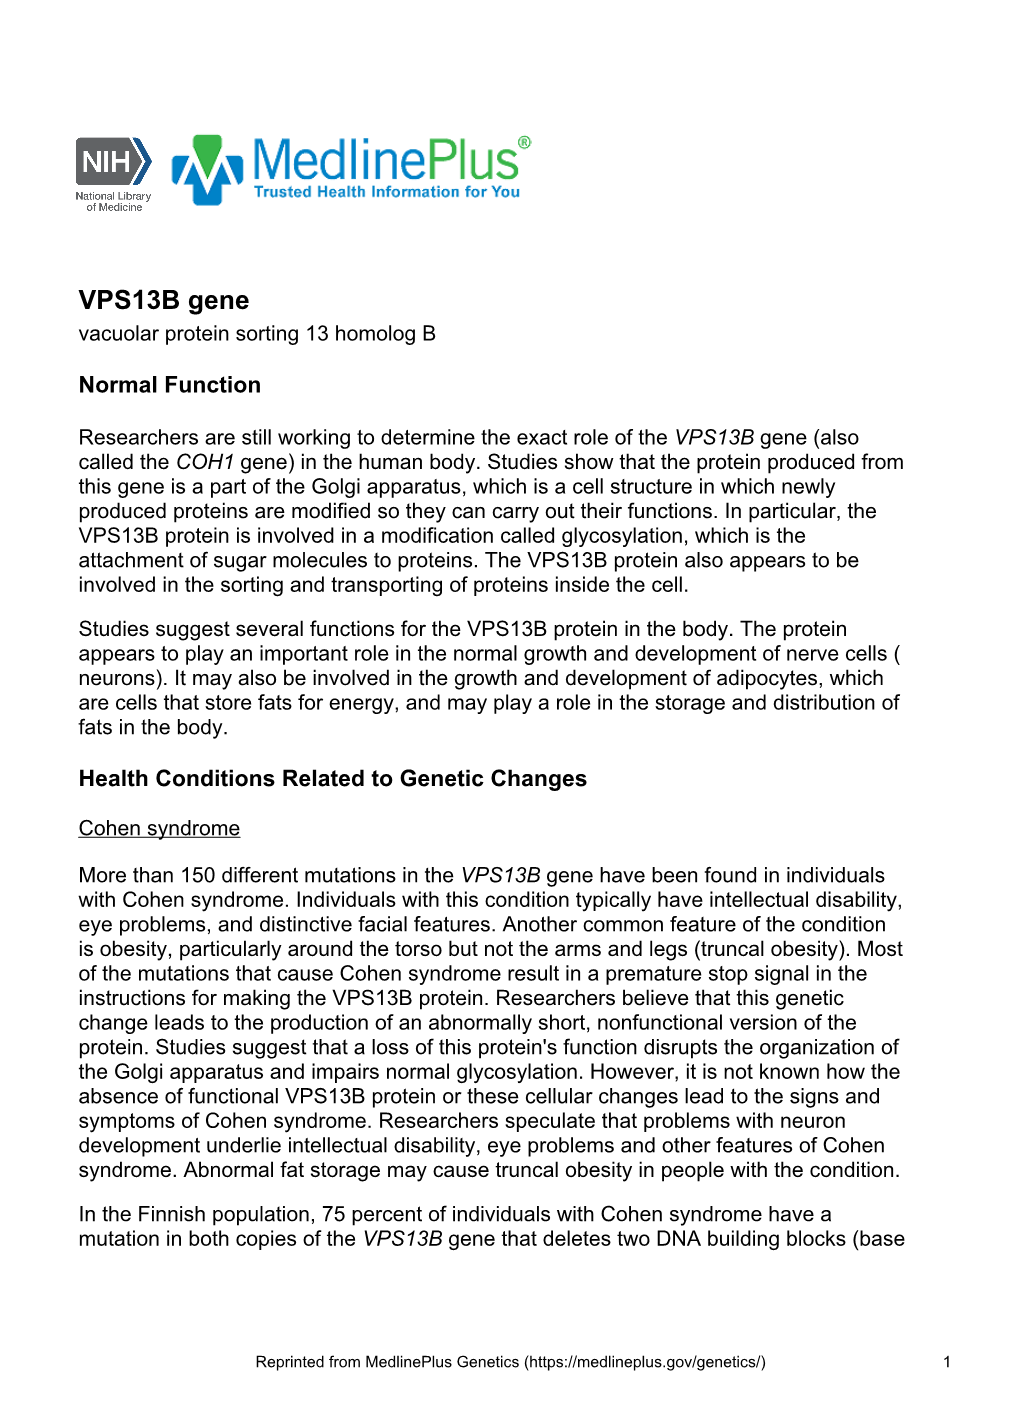 VPS13B Gene Vacuolar Protein Sorting 13 Homolog B